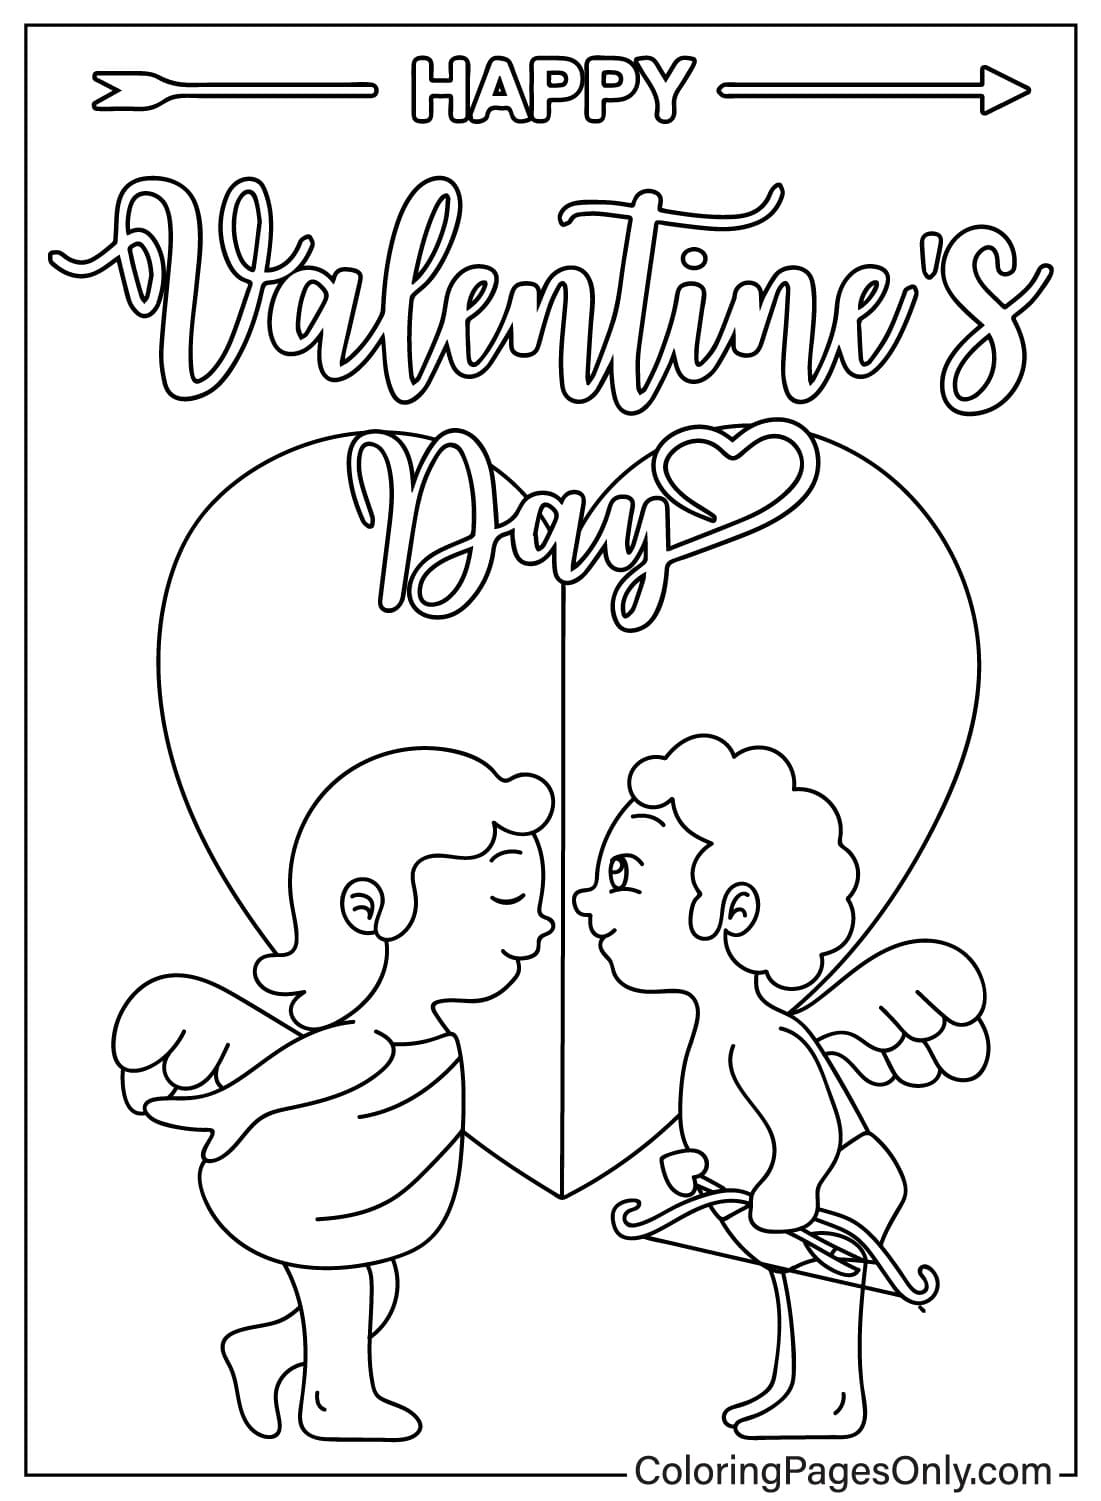 Раскраска Купидон на День святого Валентина бесплатно от Дня святого Валентина